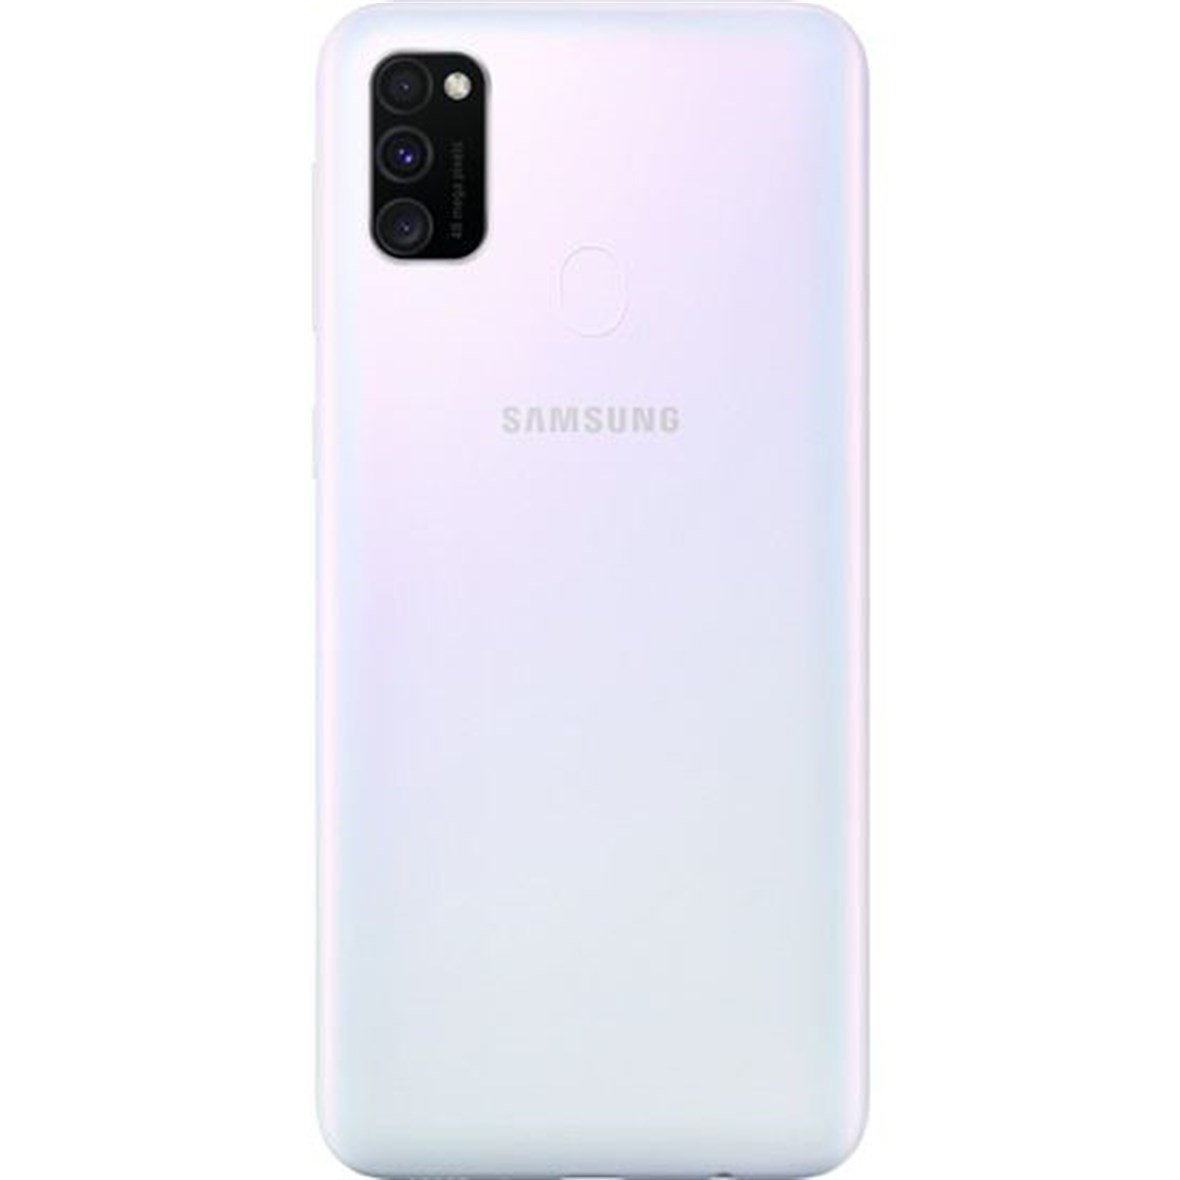 SAMSUNG Galaxy A30s 2019 64GB Beyaz Akıllı Telefon A307F-64GB-WHITE